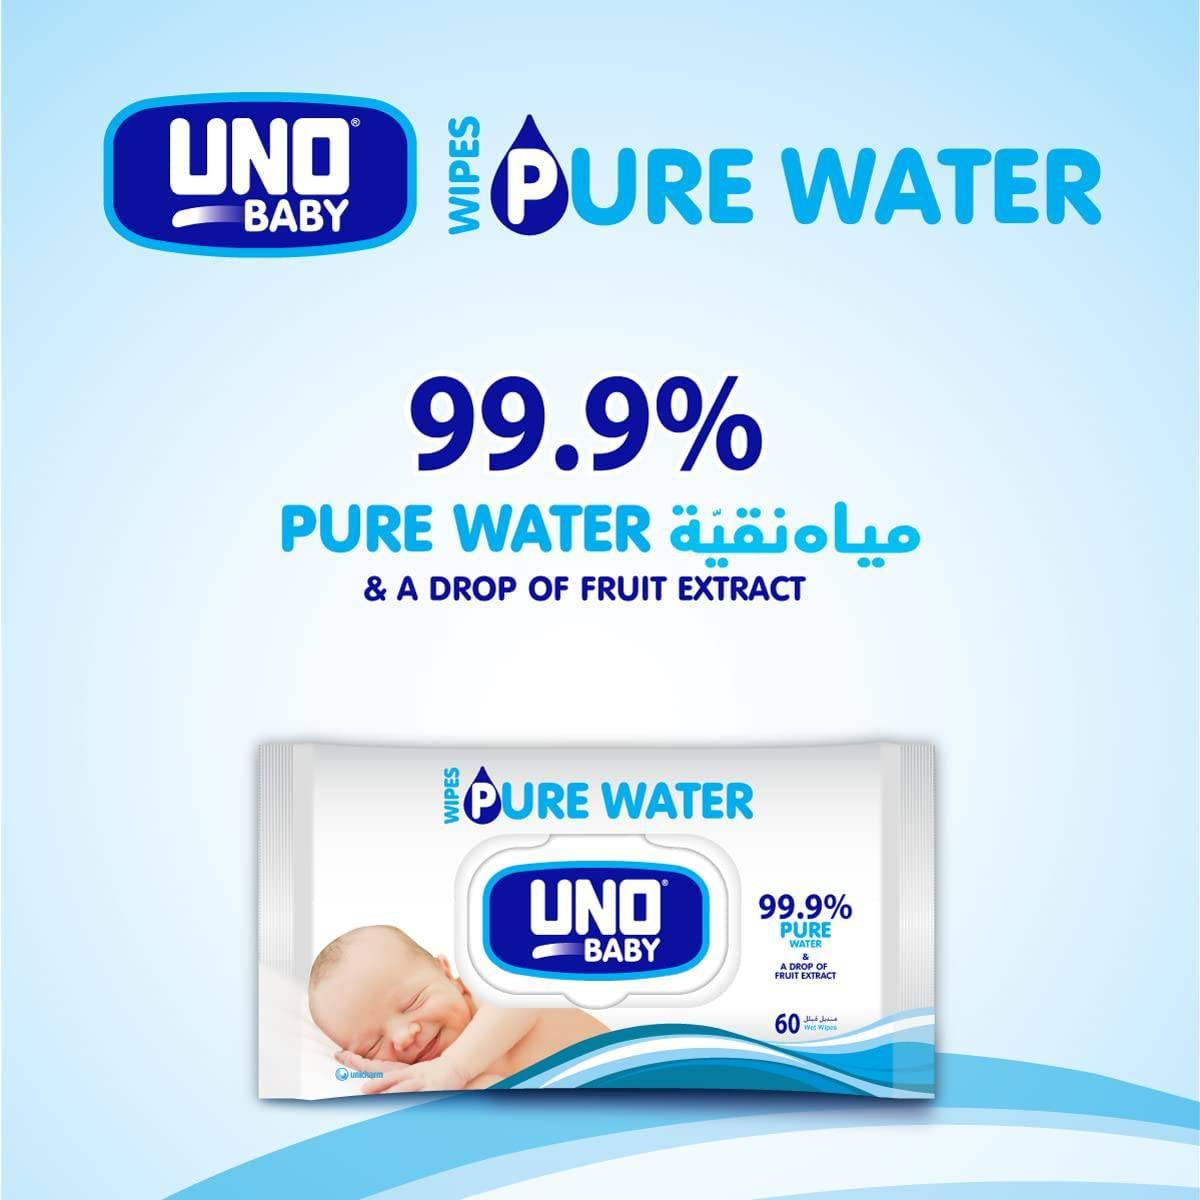 WaterWipes® Sensitive Baby Wipes, 60 ct - Metro Market